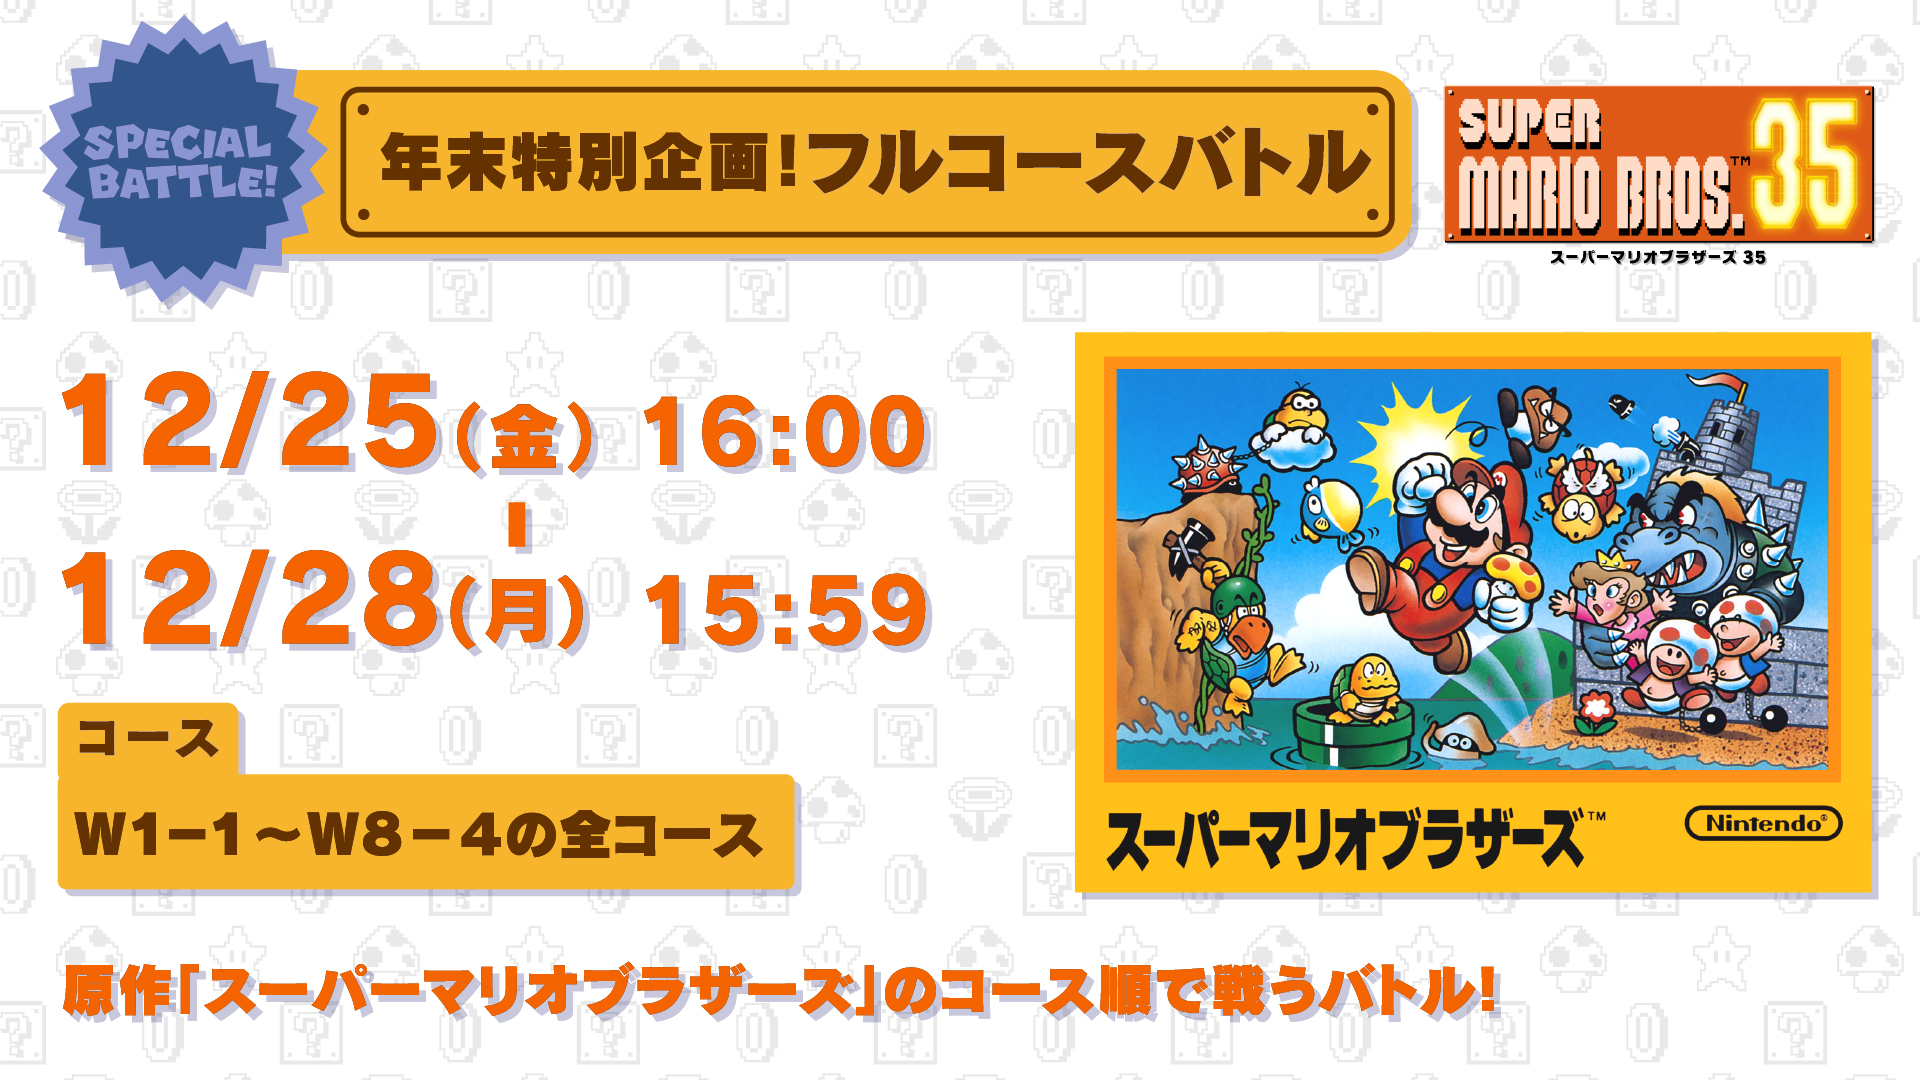 Super Mario Bros 35 New Special Battle Event Announced For December 25 Nintendo Everything